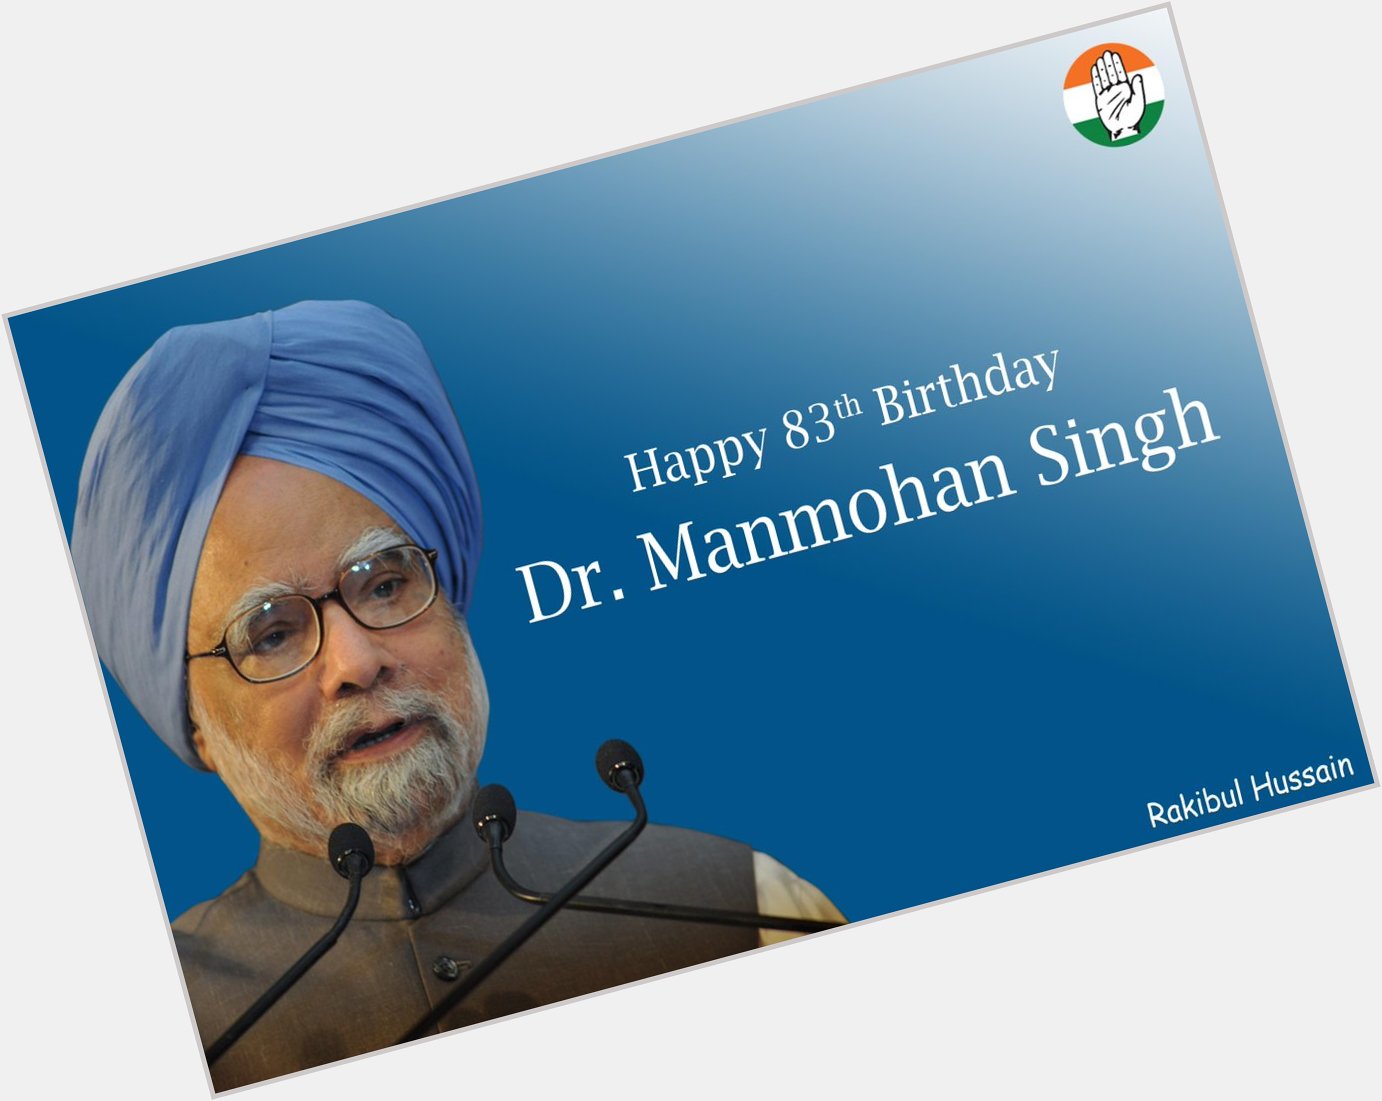 Wishing you a very Happy Birthday Dr. Manmohan Singh.  